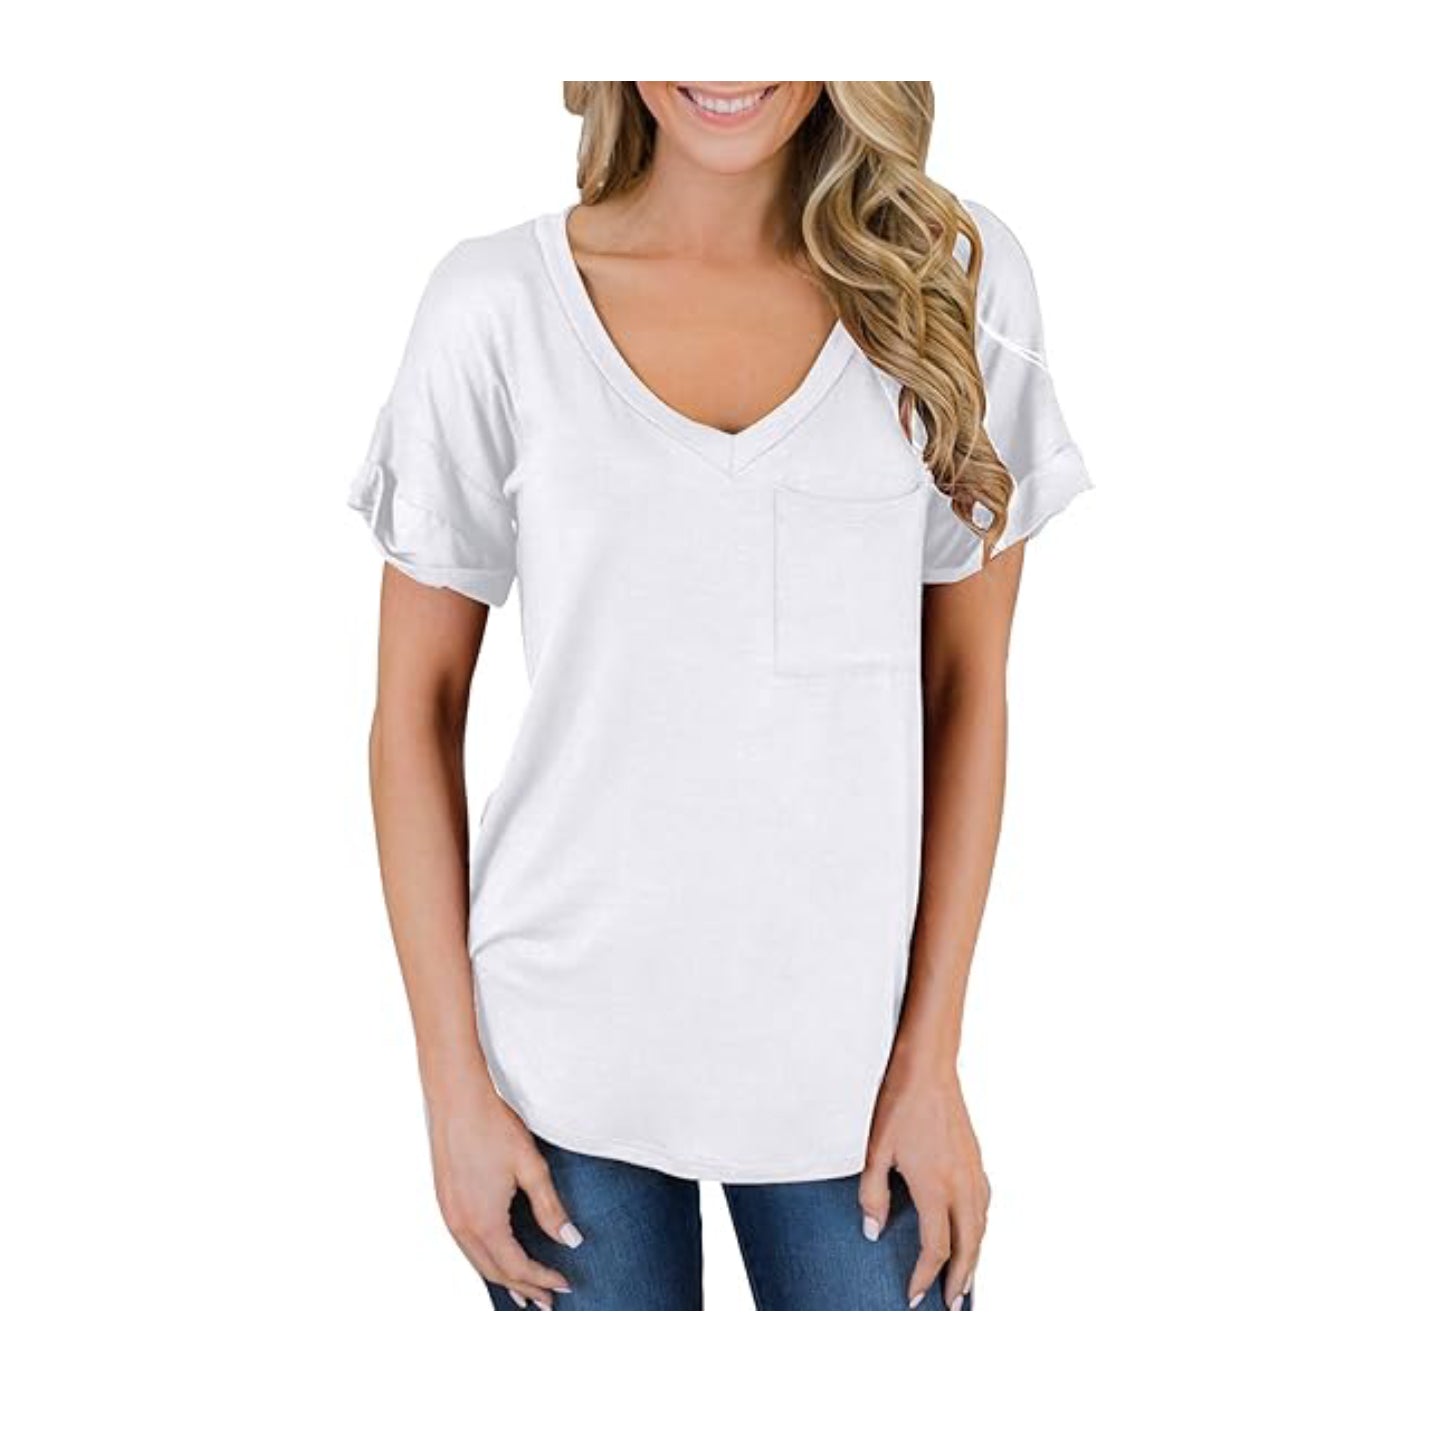 Short Sleeve V-Neck Shirts Loose Casual Tee T-Shirtshirt supplier